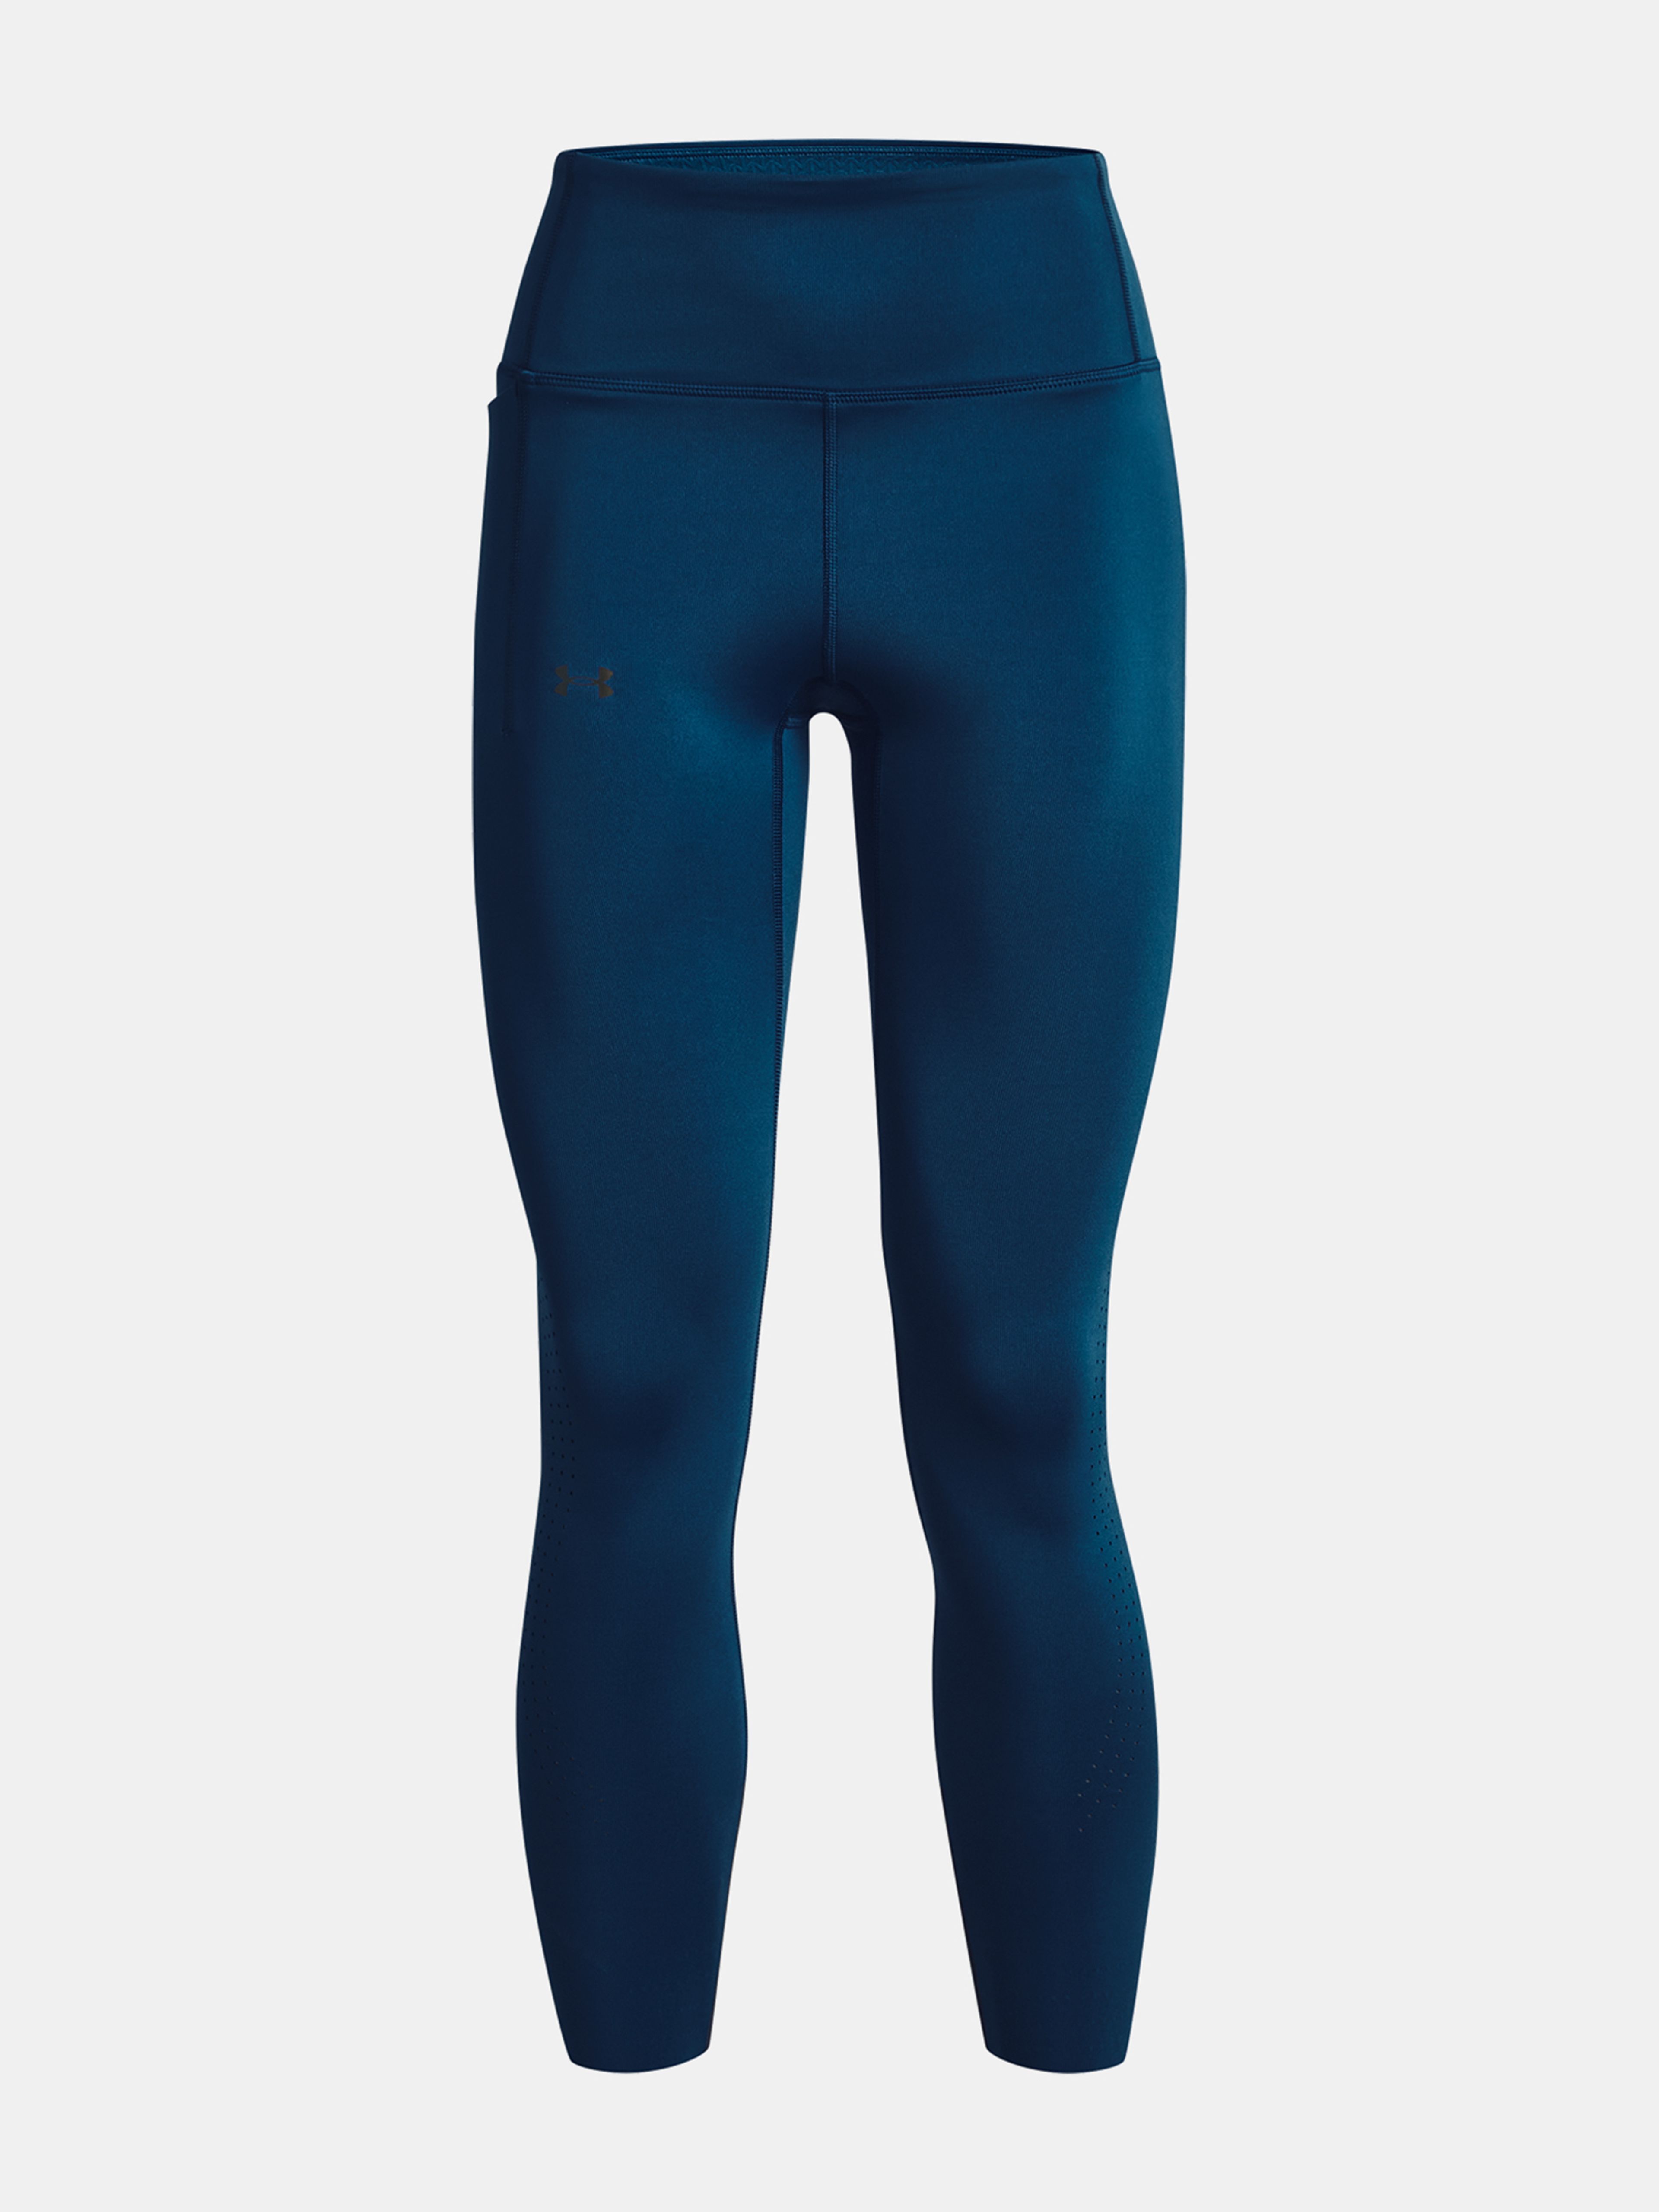  UA SF Rush Ank Leg Perf, Black - women's compression  leggings - UNDER ARMOUR - 74.66 € - outdoorové oblečení a vybavení shop